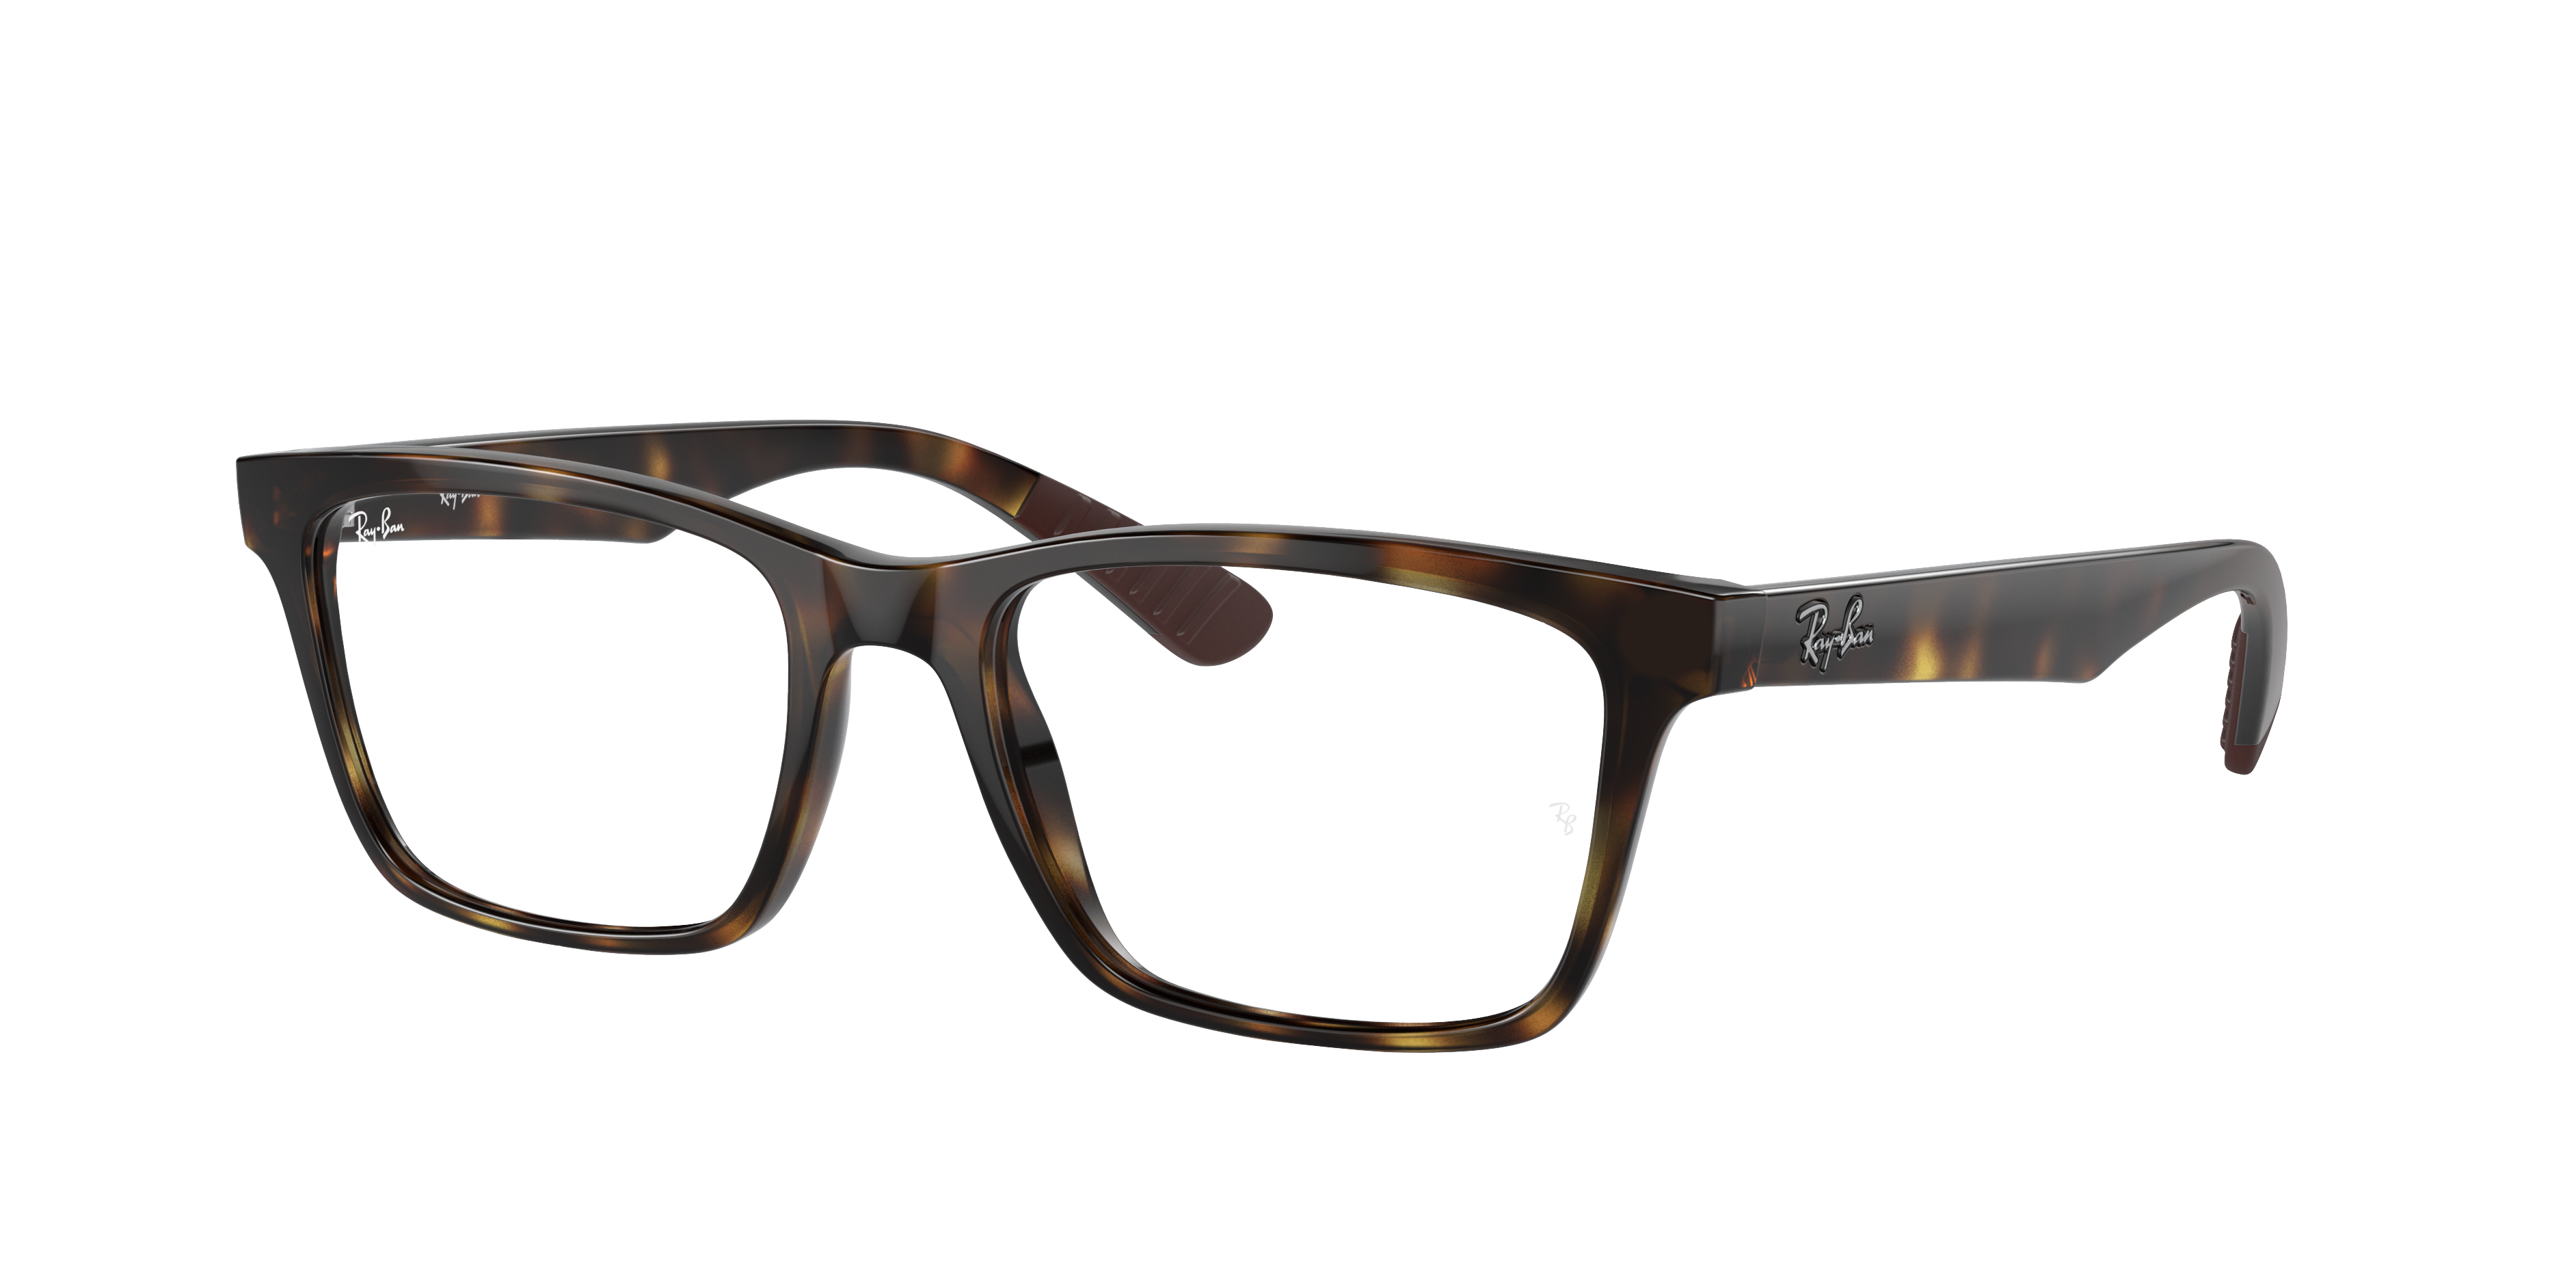 Rb7025 Optics Eyeglasses with Havana Frame - RB7025 | Ray-Ban®